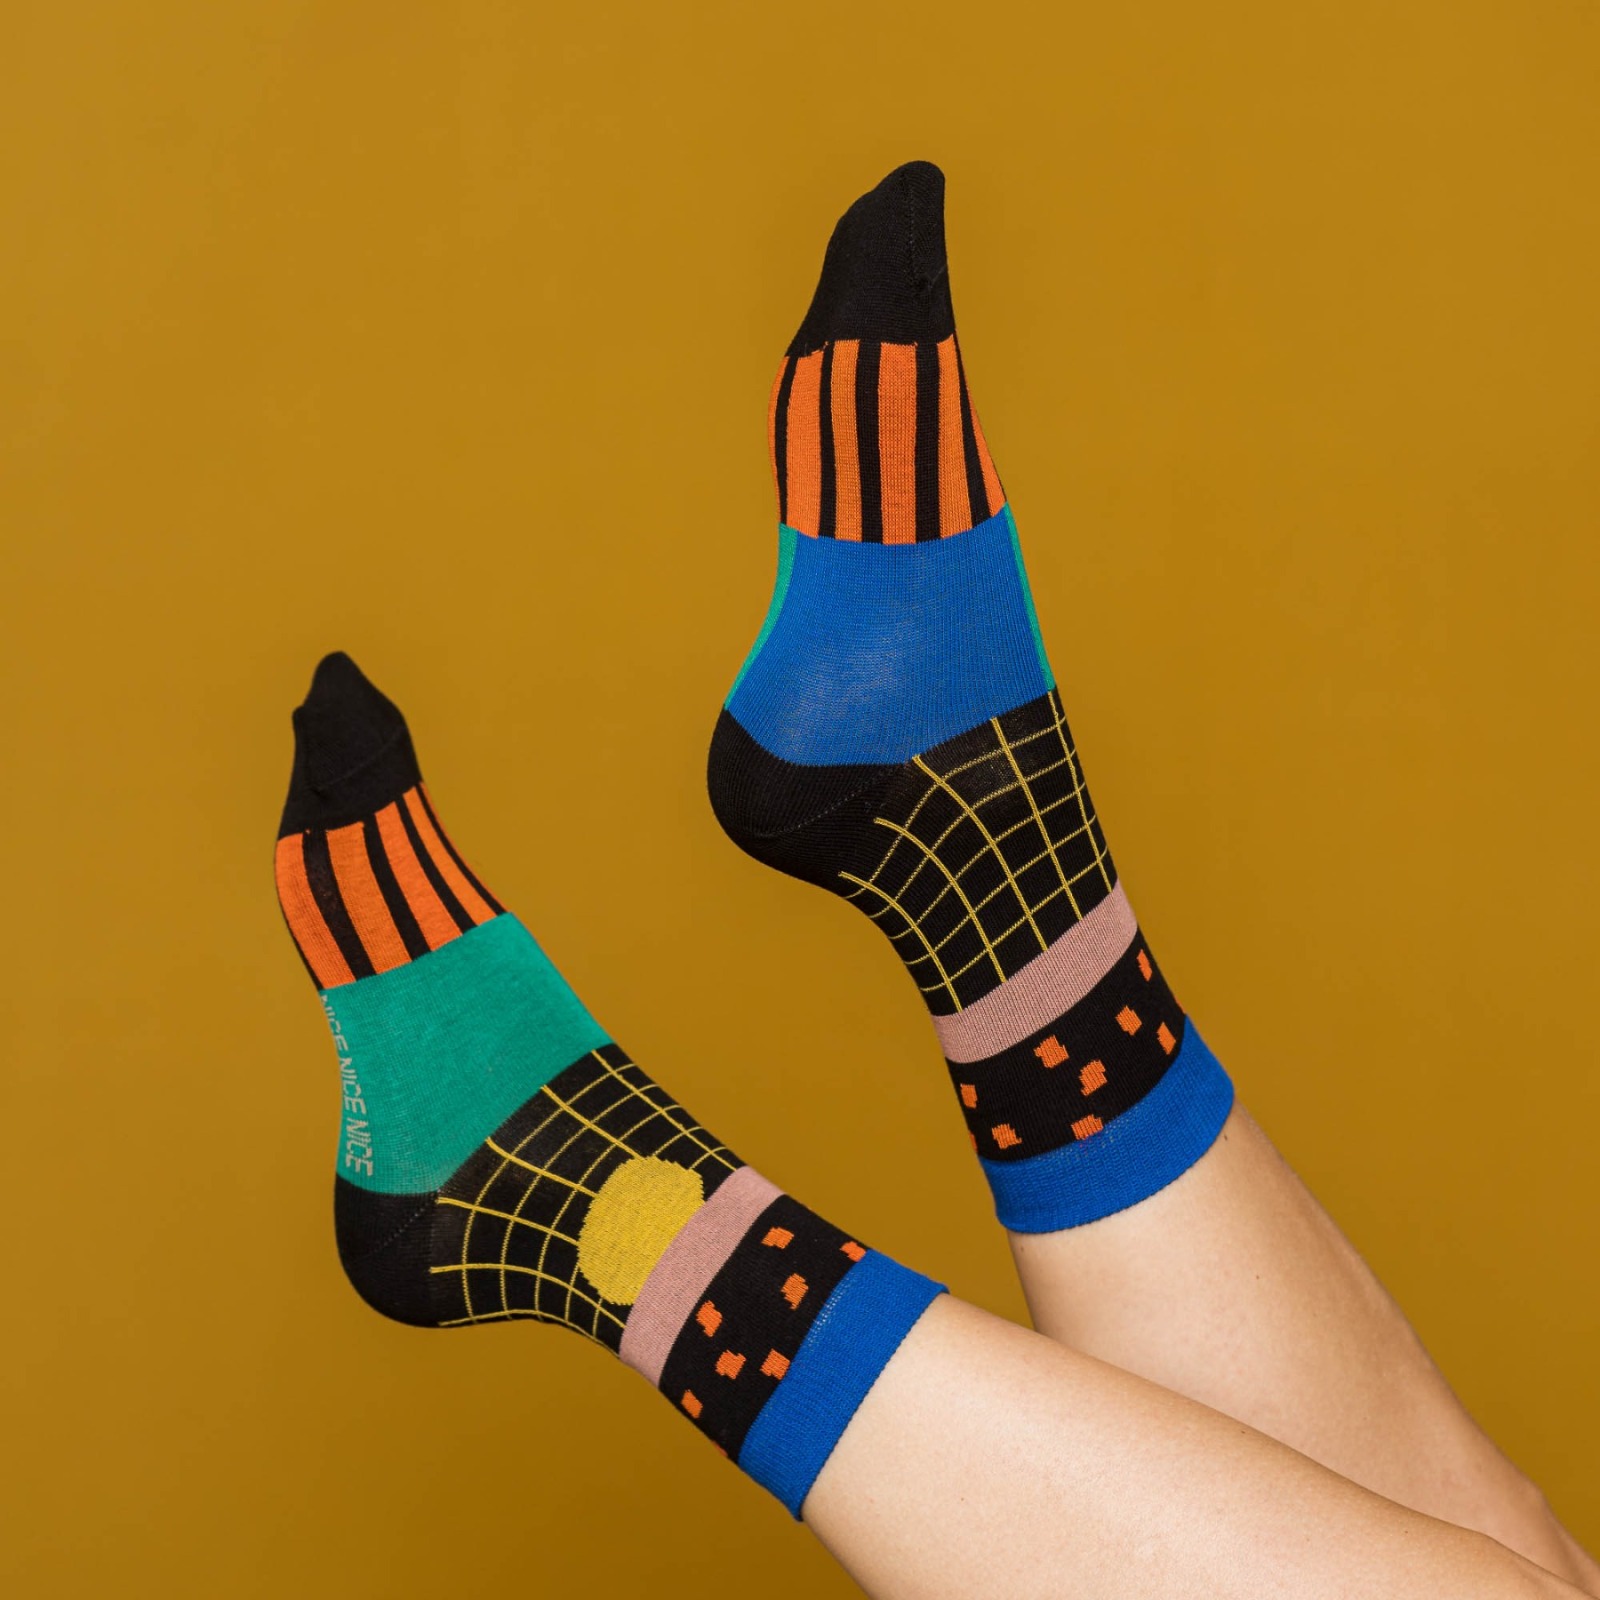 nicenicenice - nice socks pattern black 4